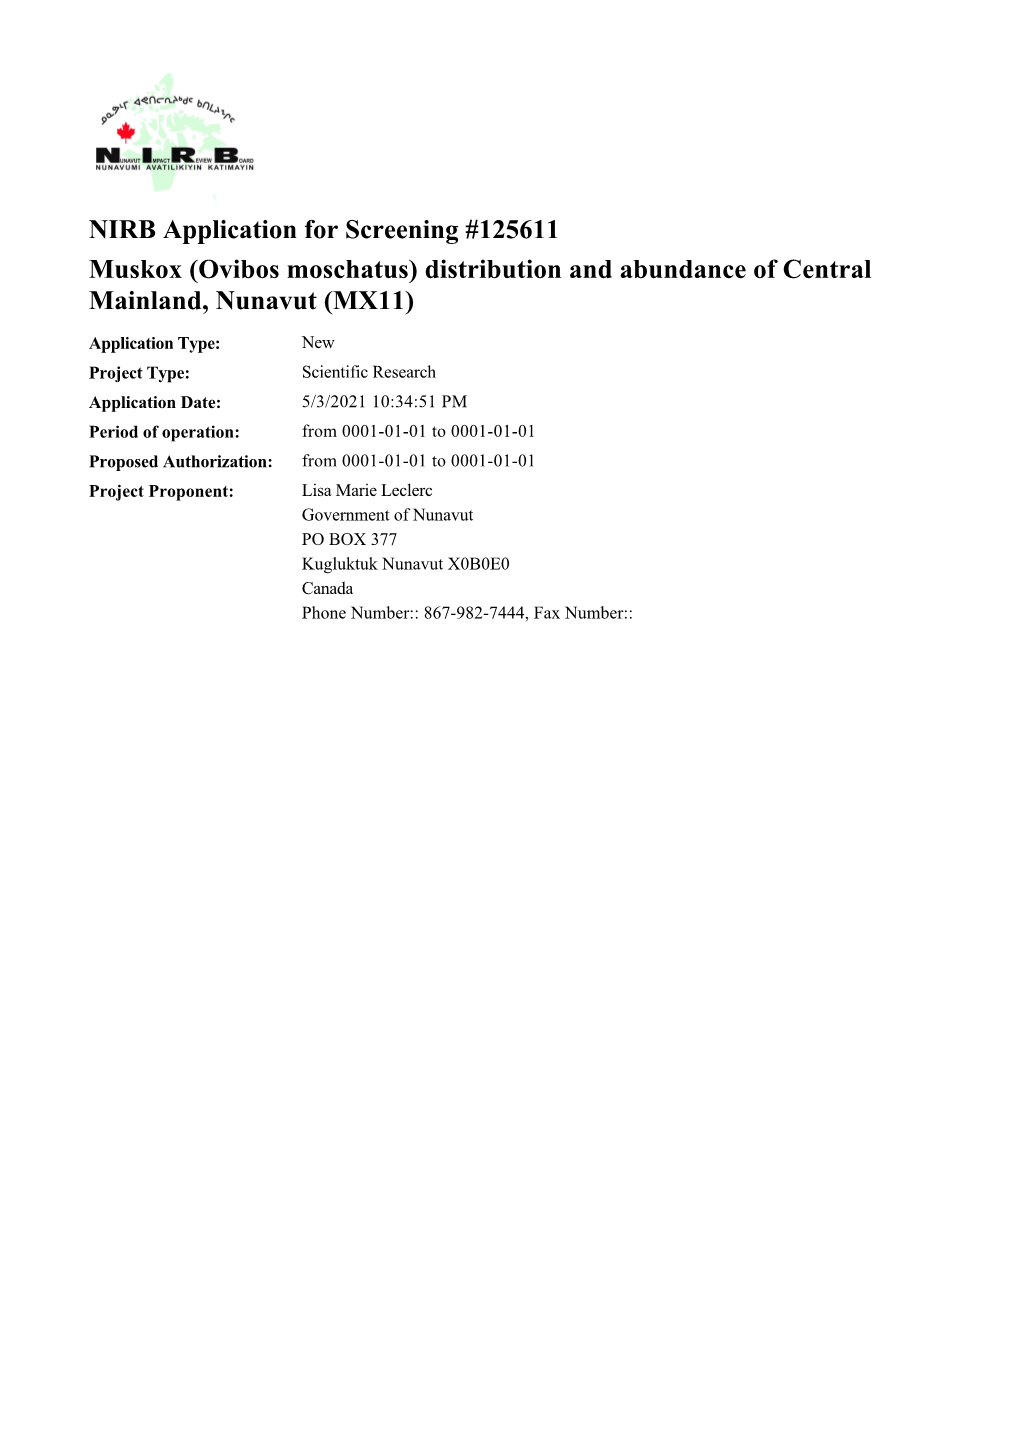 NIRB Application for Screening #125611 Muskox (Ovibos Moschatus) Distribution and Abundance of Central Mainland, Nunavut (MX11)